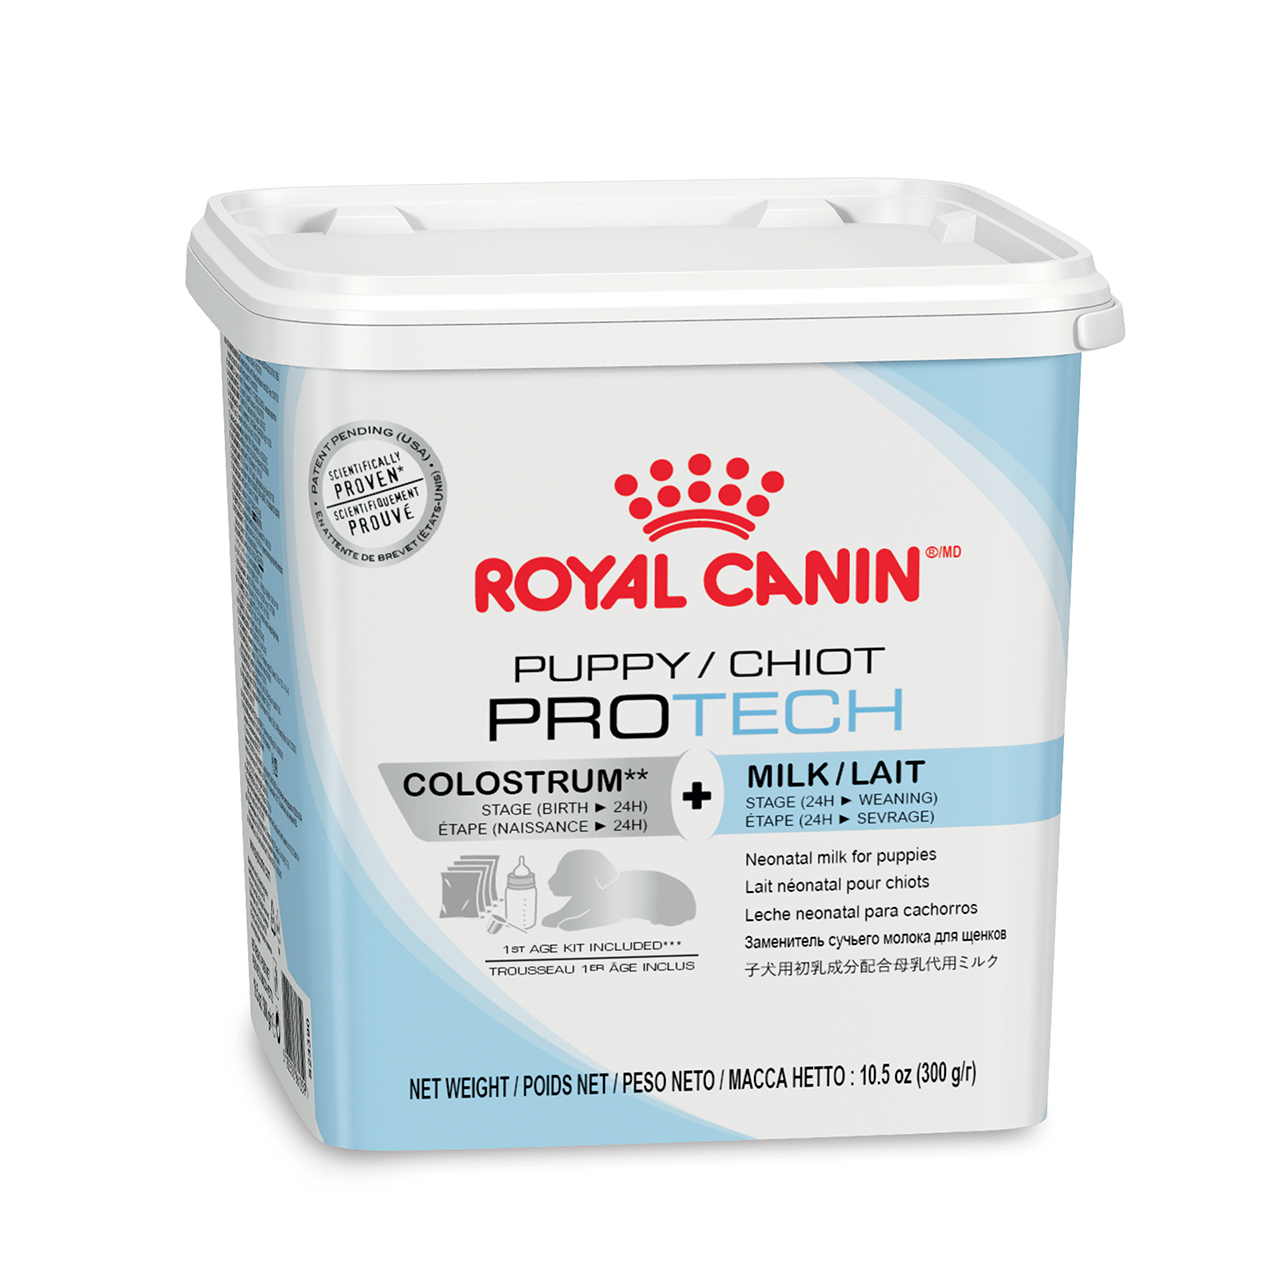 Vervolgen bijgeloof Sanctie Royal Canin Professional Dog Range - Royal Canin